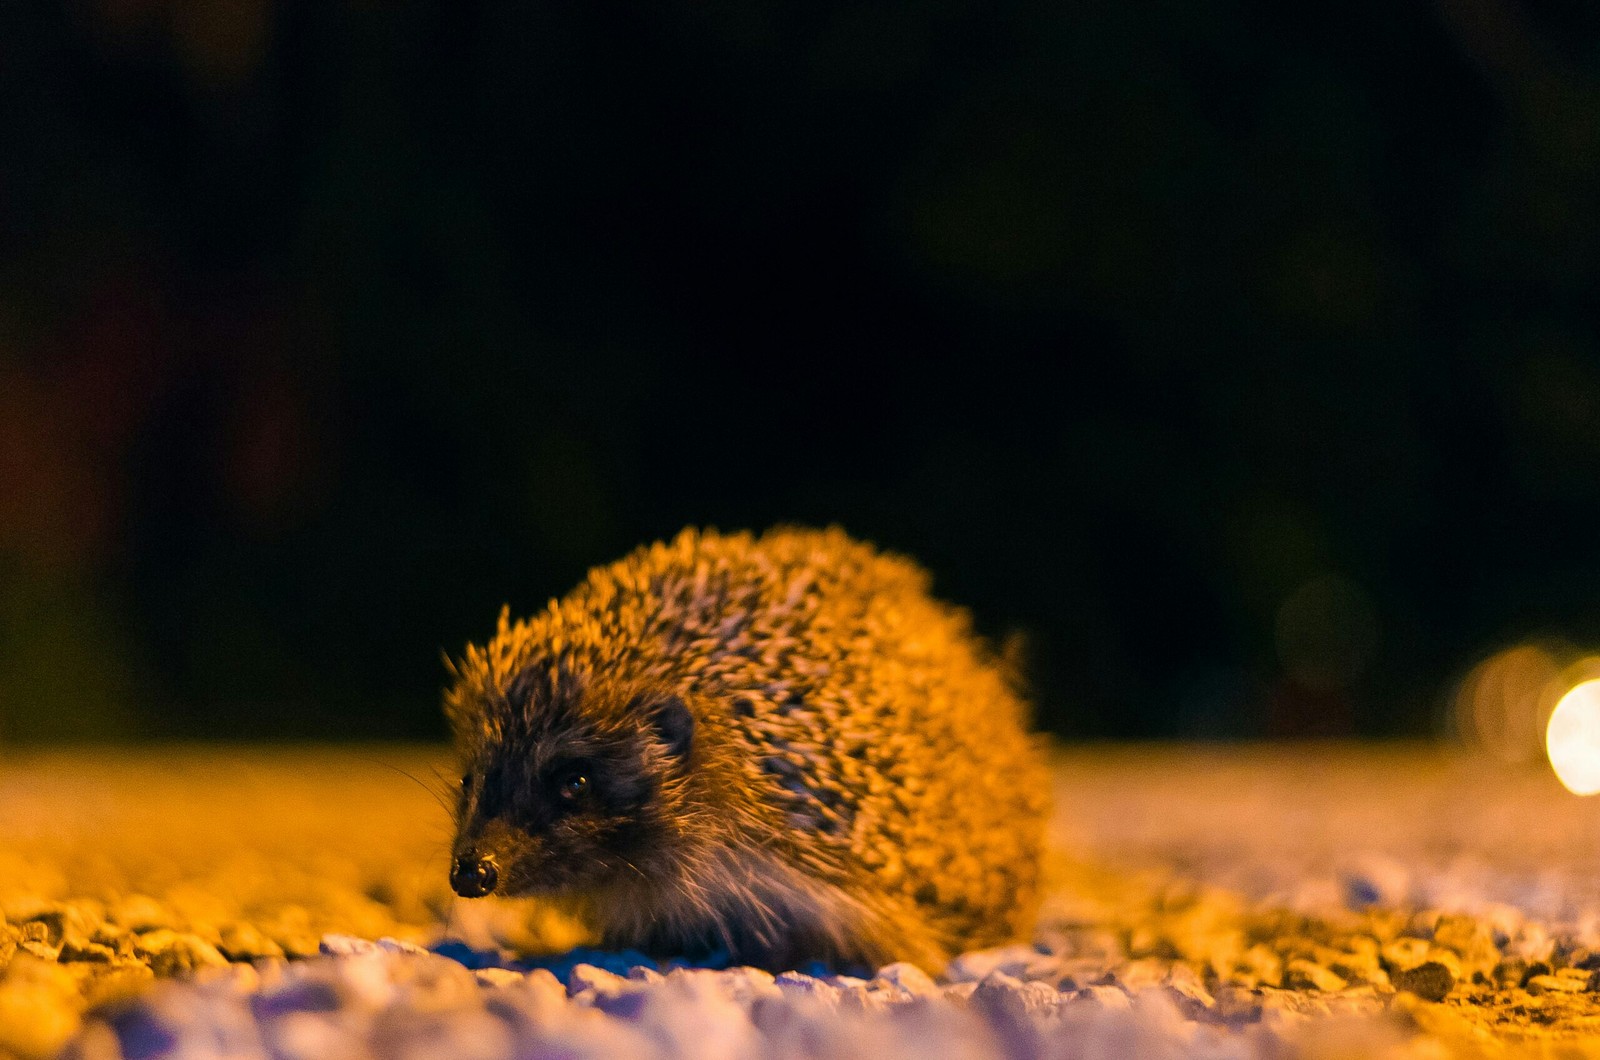 Hedgehog in the night. - My, Hedgehog, The photo